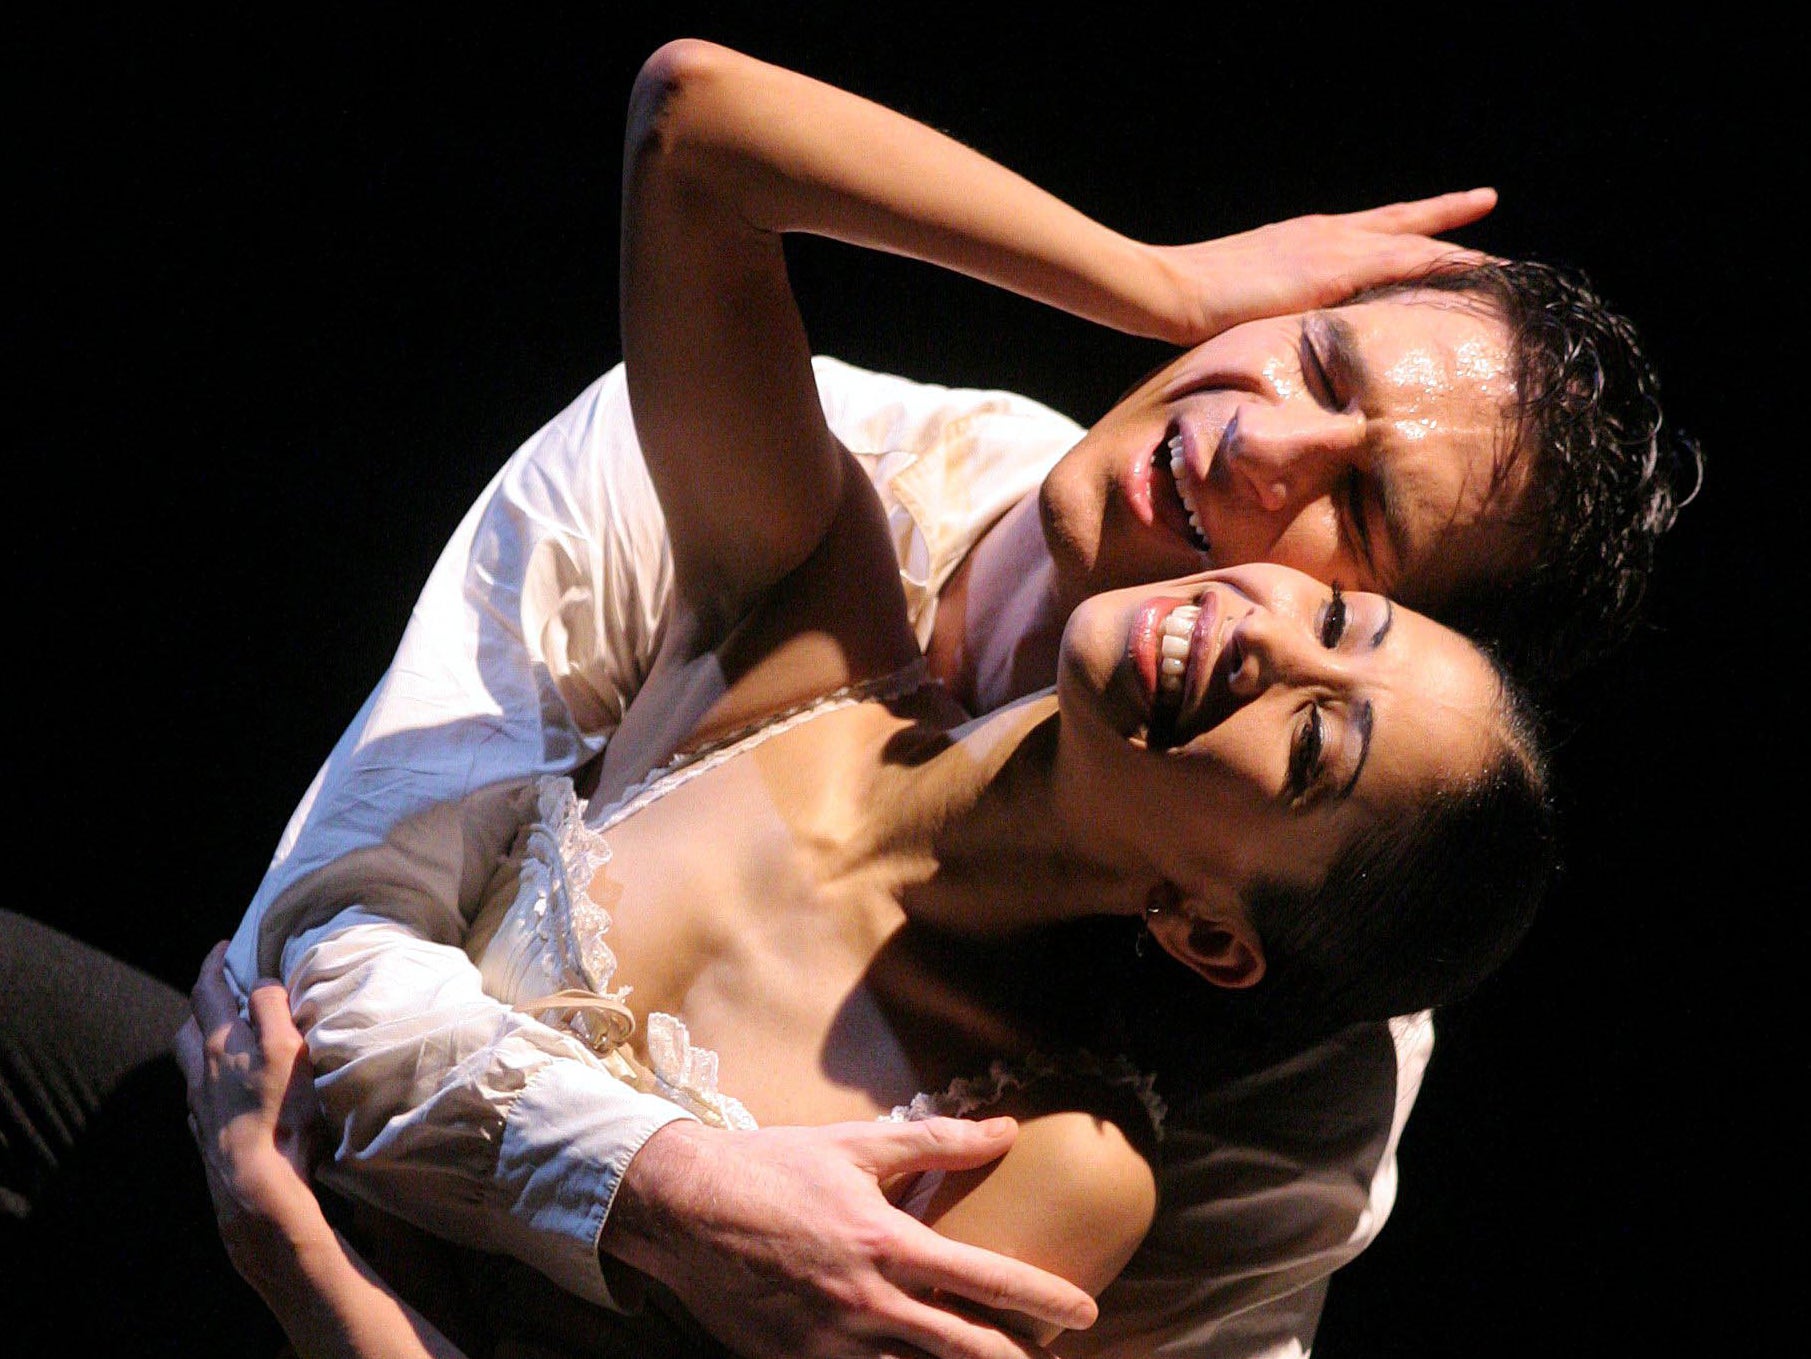 &#13;
Jonathan Ollivier performs in La Traviata alongside Desiré Samaai &#13;